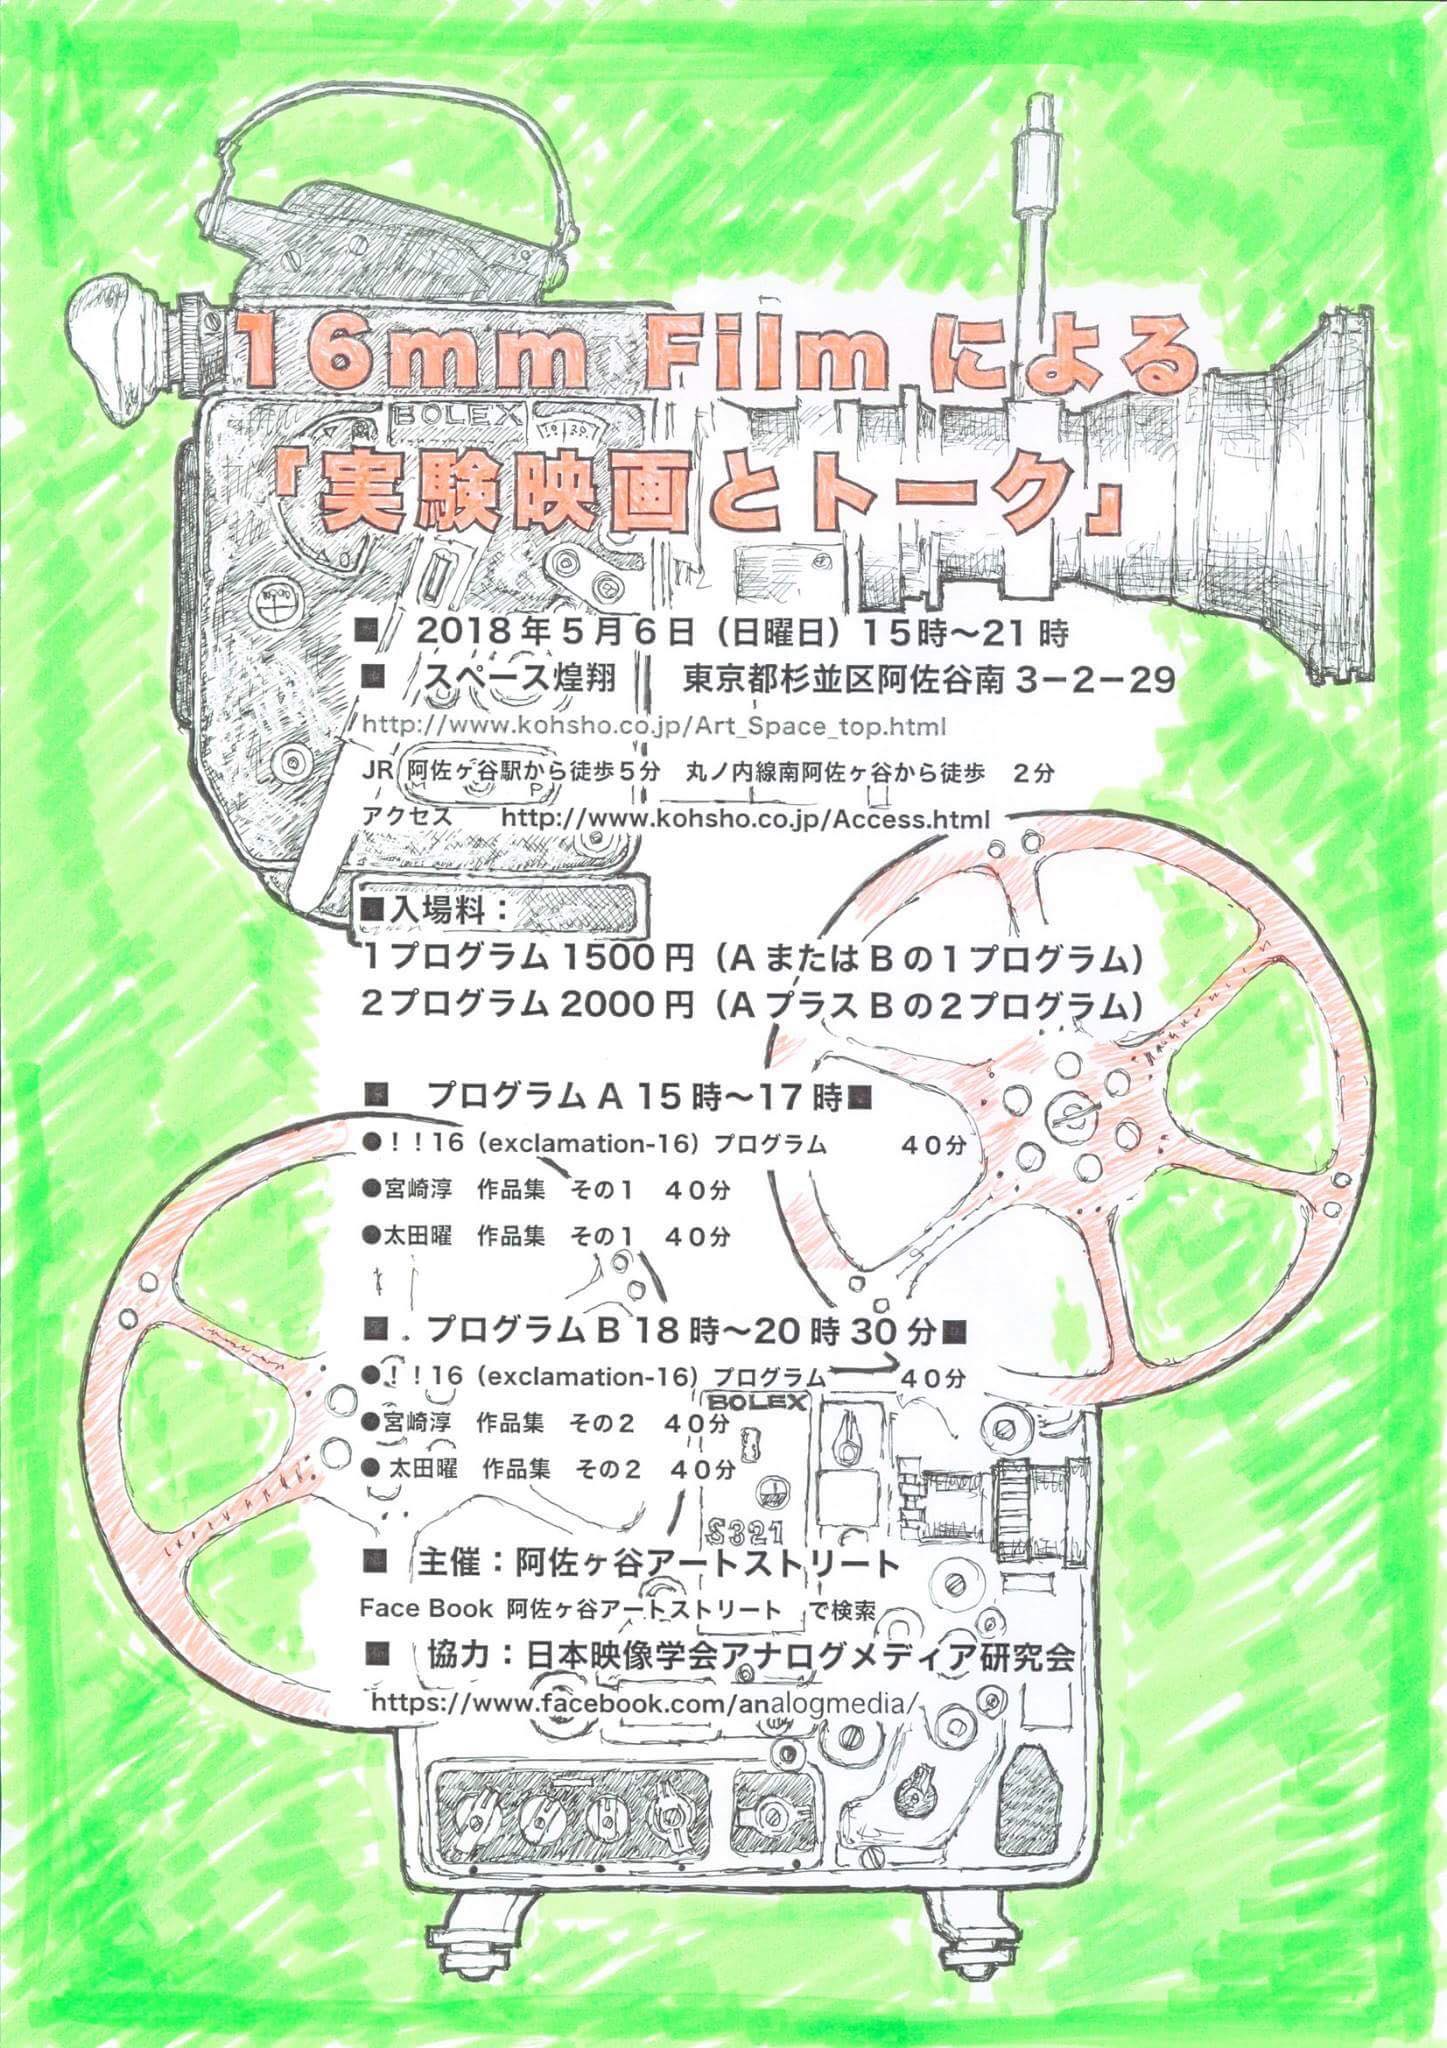 16mmフィルムによる実験映画とトーク